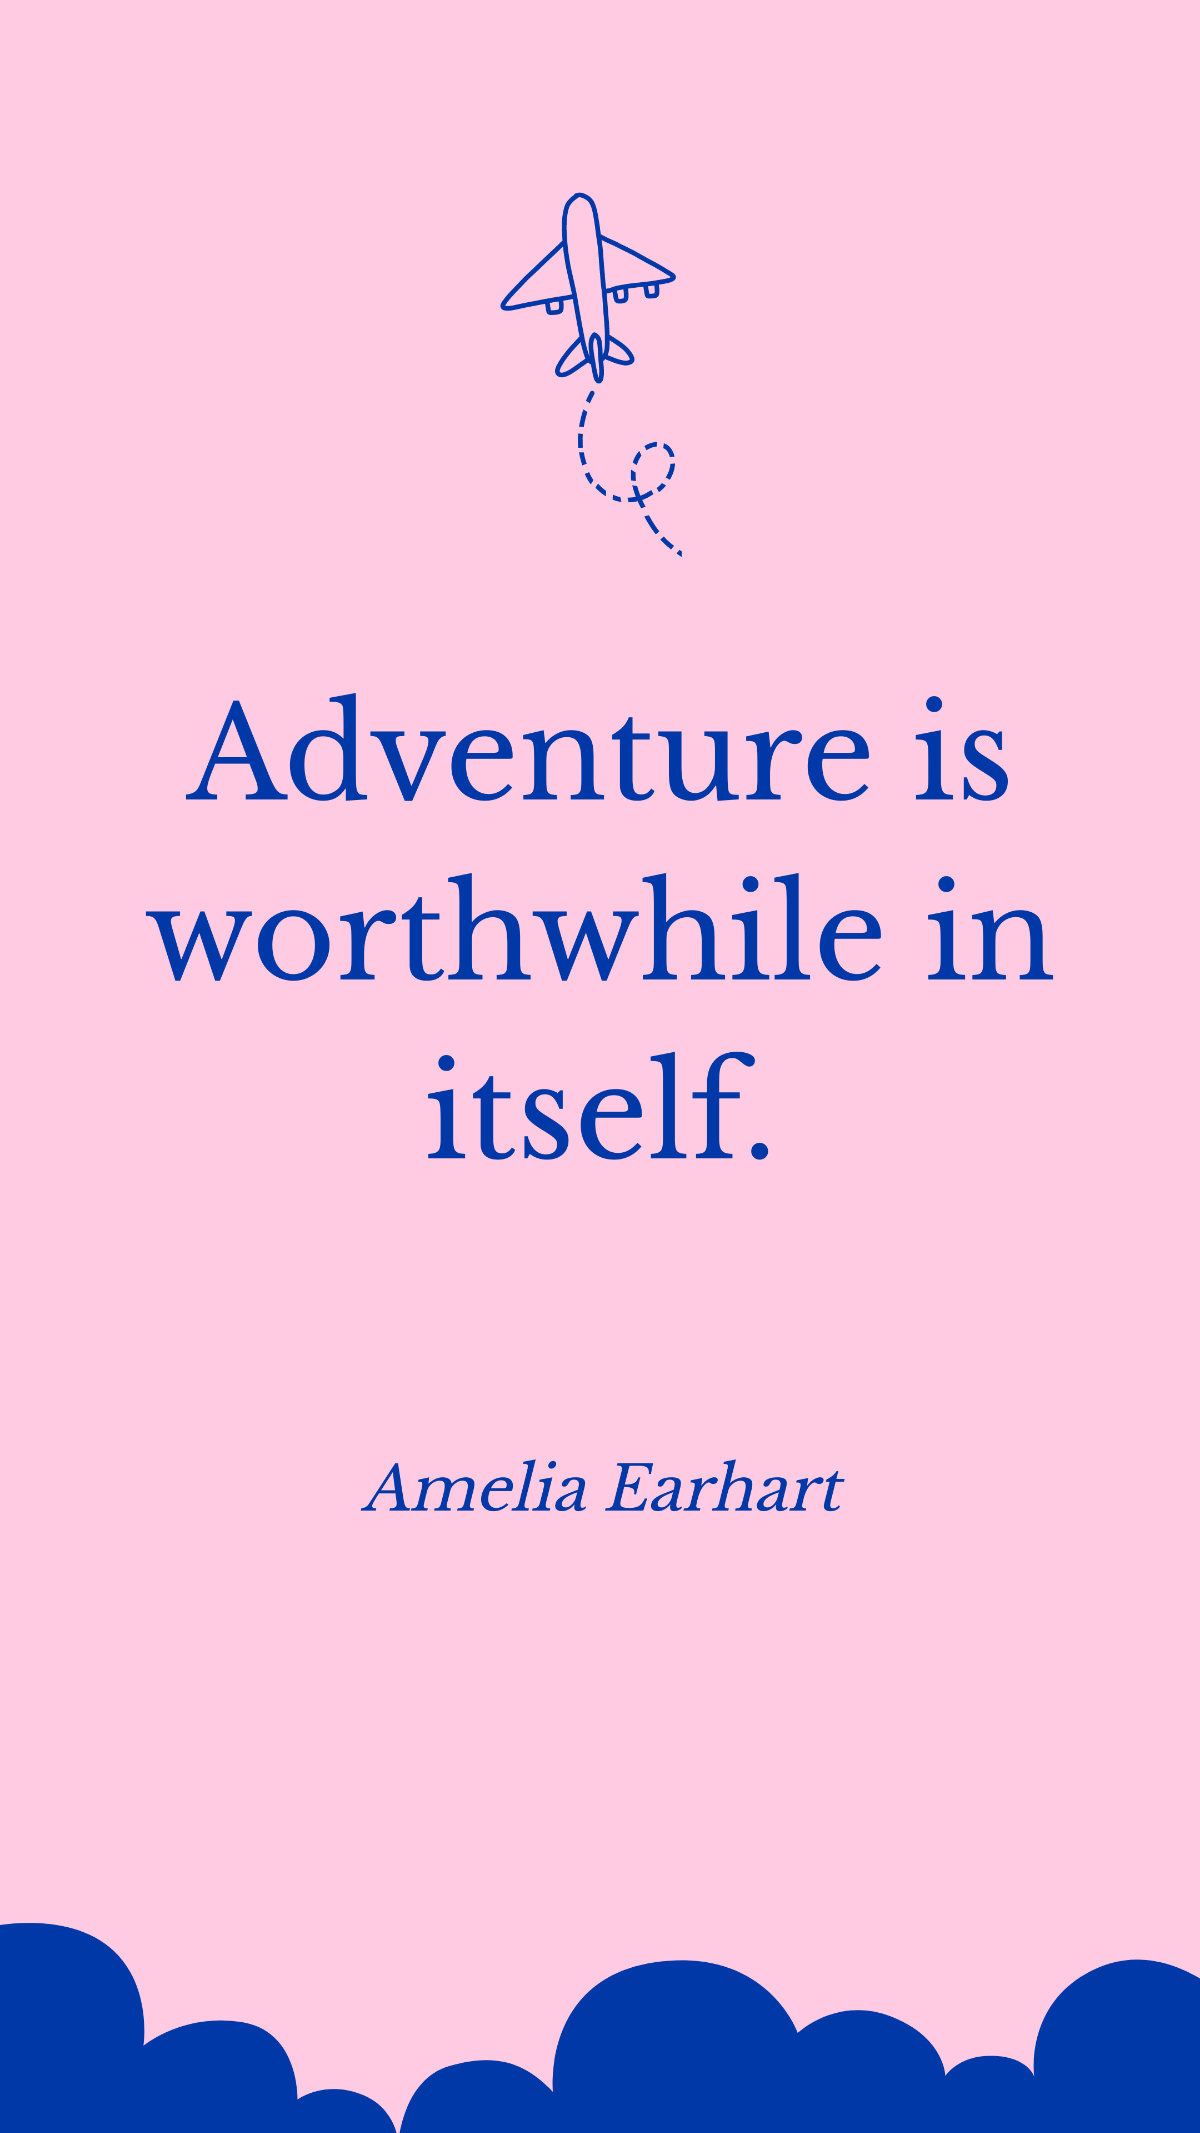 Free Amelia Earhart - Adventure is worthwhile in itself. Template